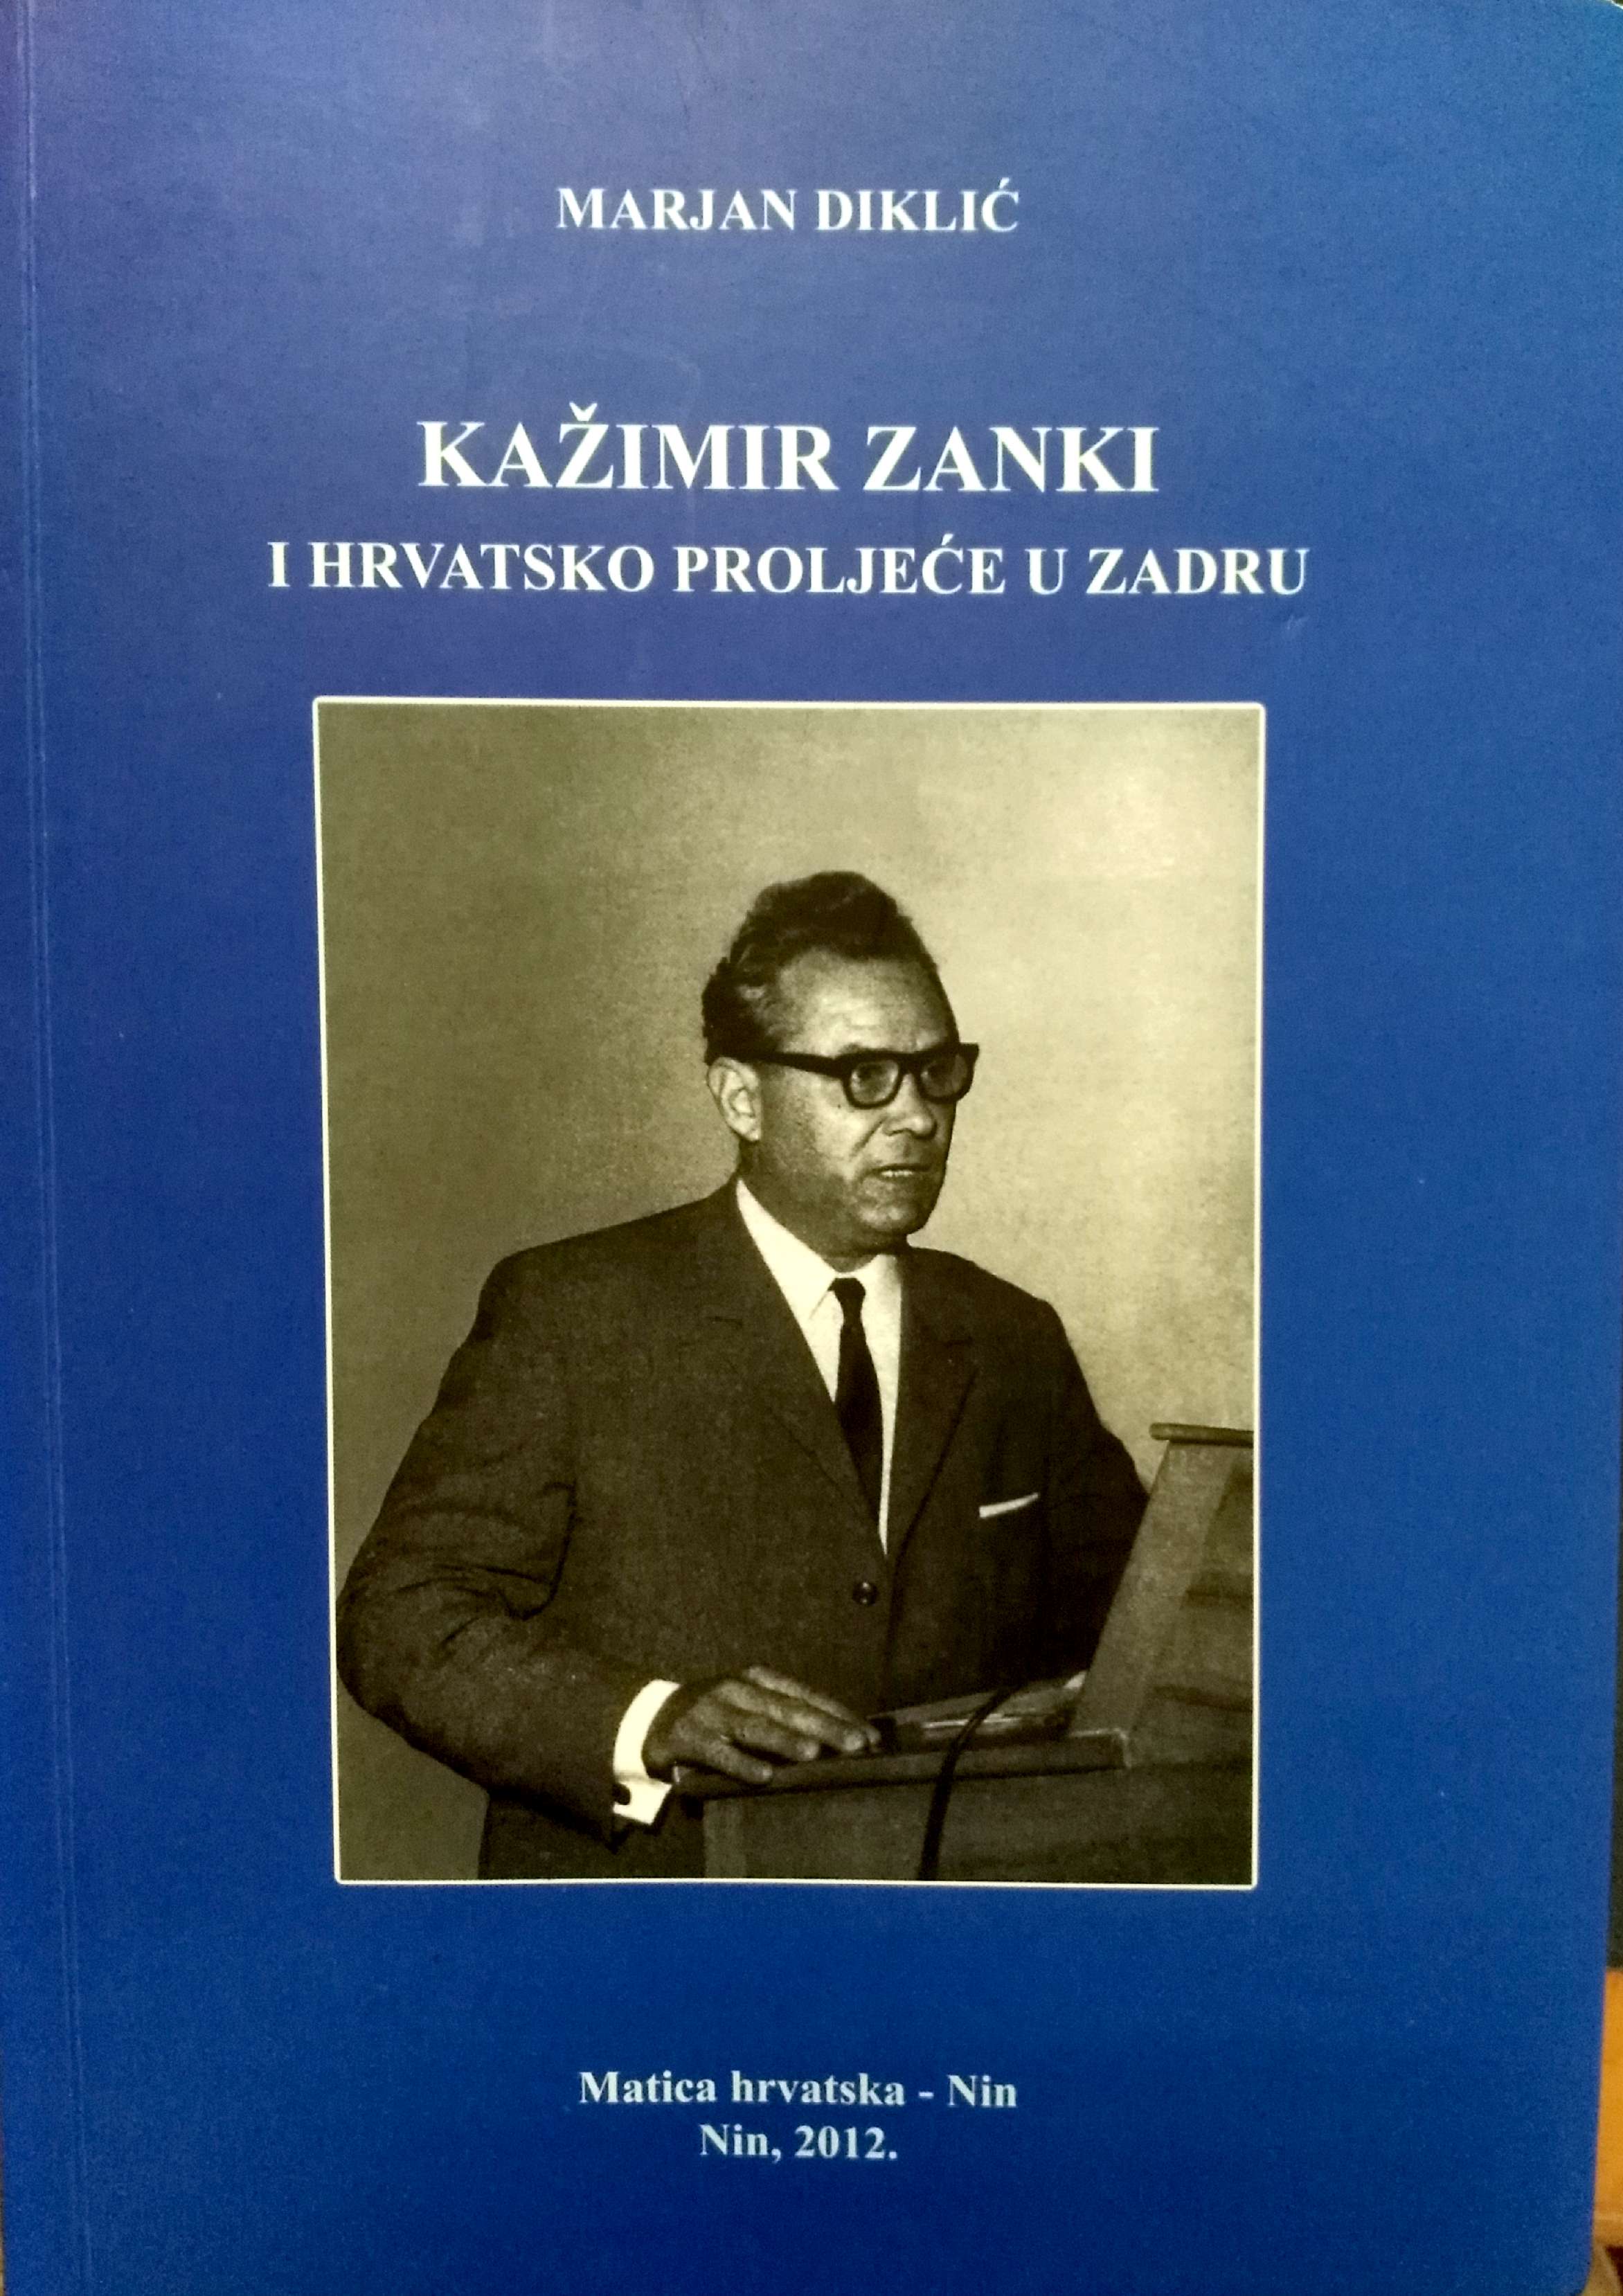 Cover of the book by Marjan Diklić, Kažimir Zanki i hrvatsko proljeće u Zadru (Kažimir Zanki and the Croatian Spring in Zadar). Nin: Matica hrvatska Nin, 2015.